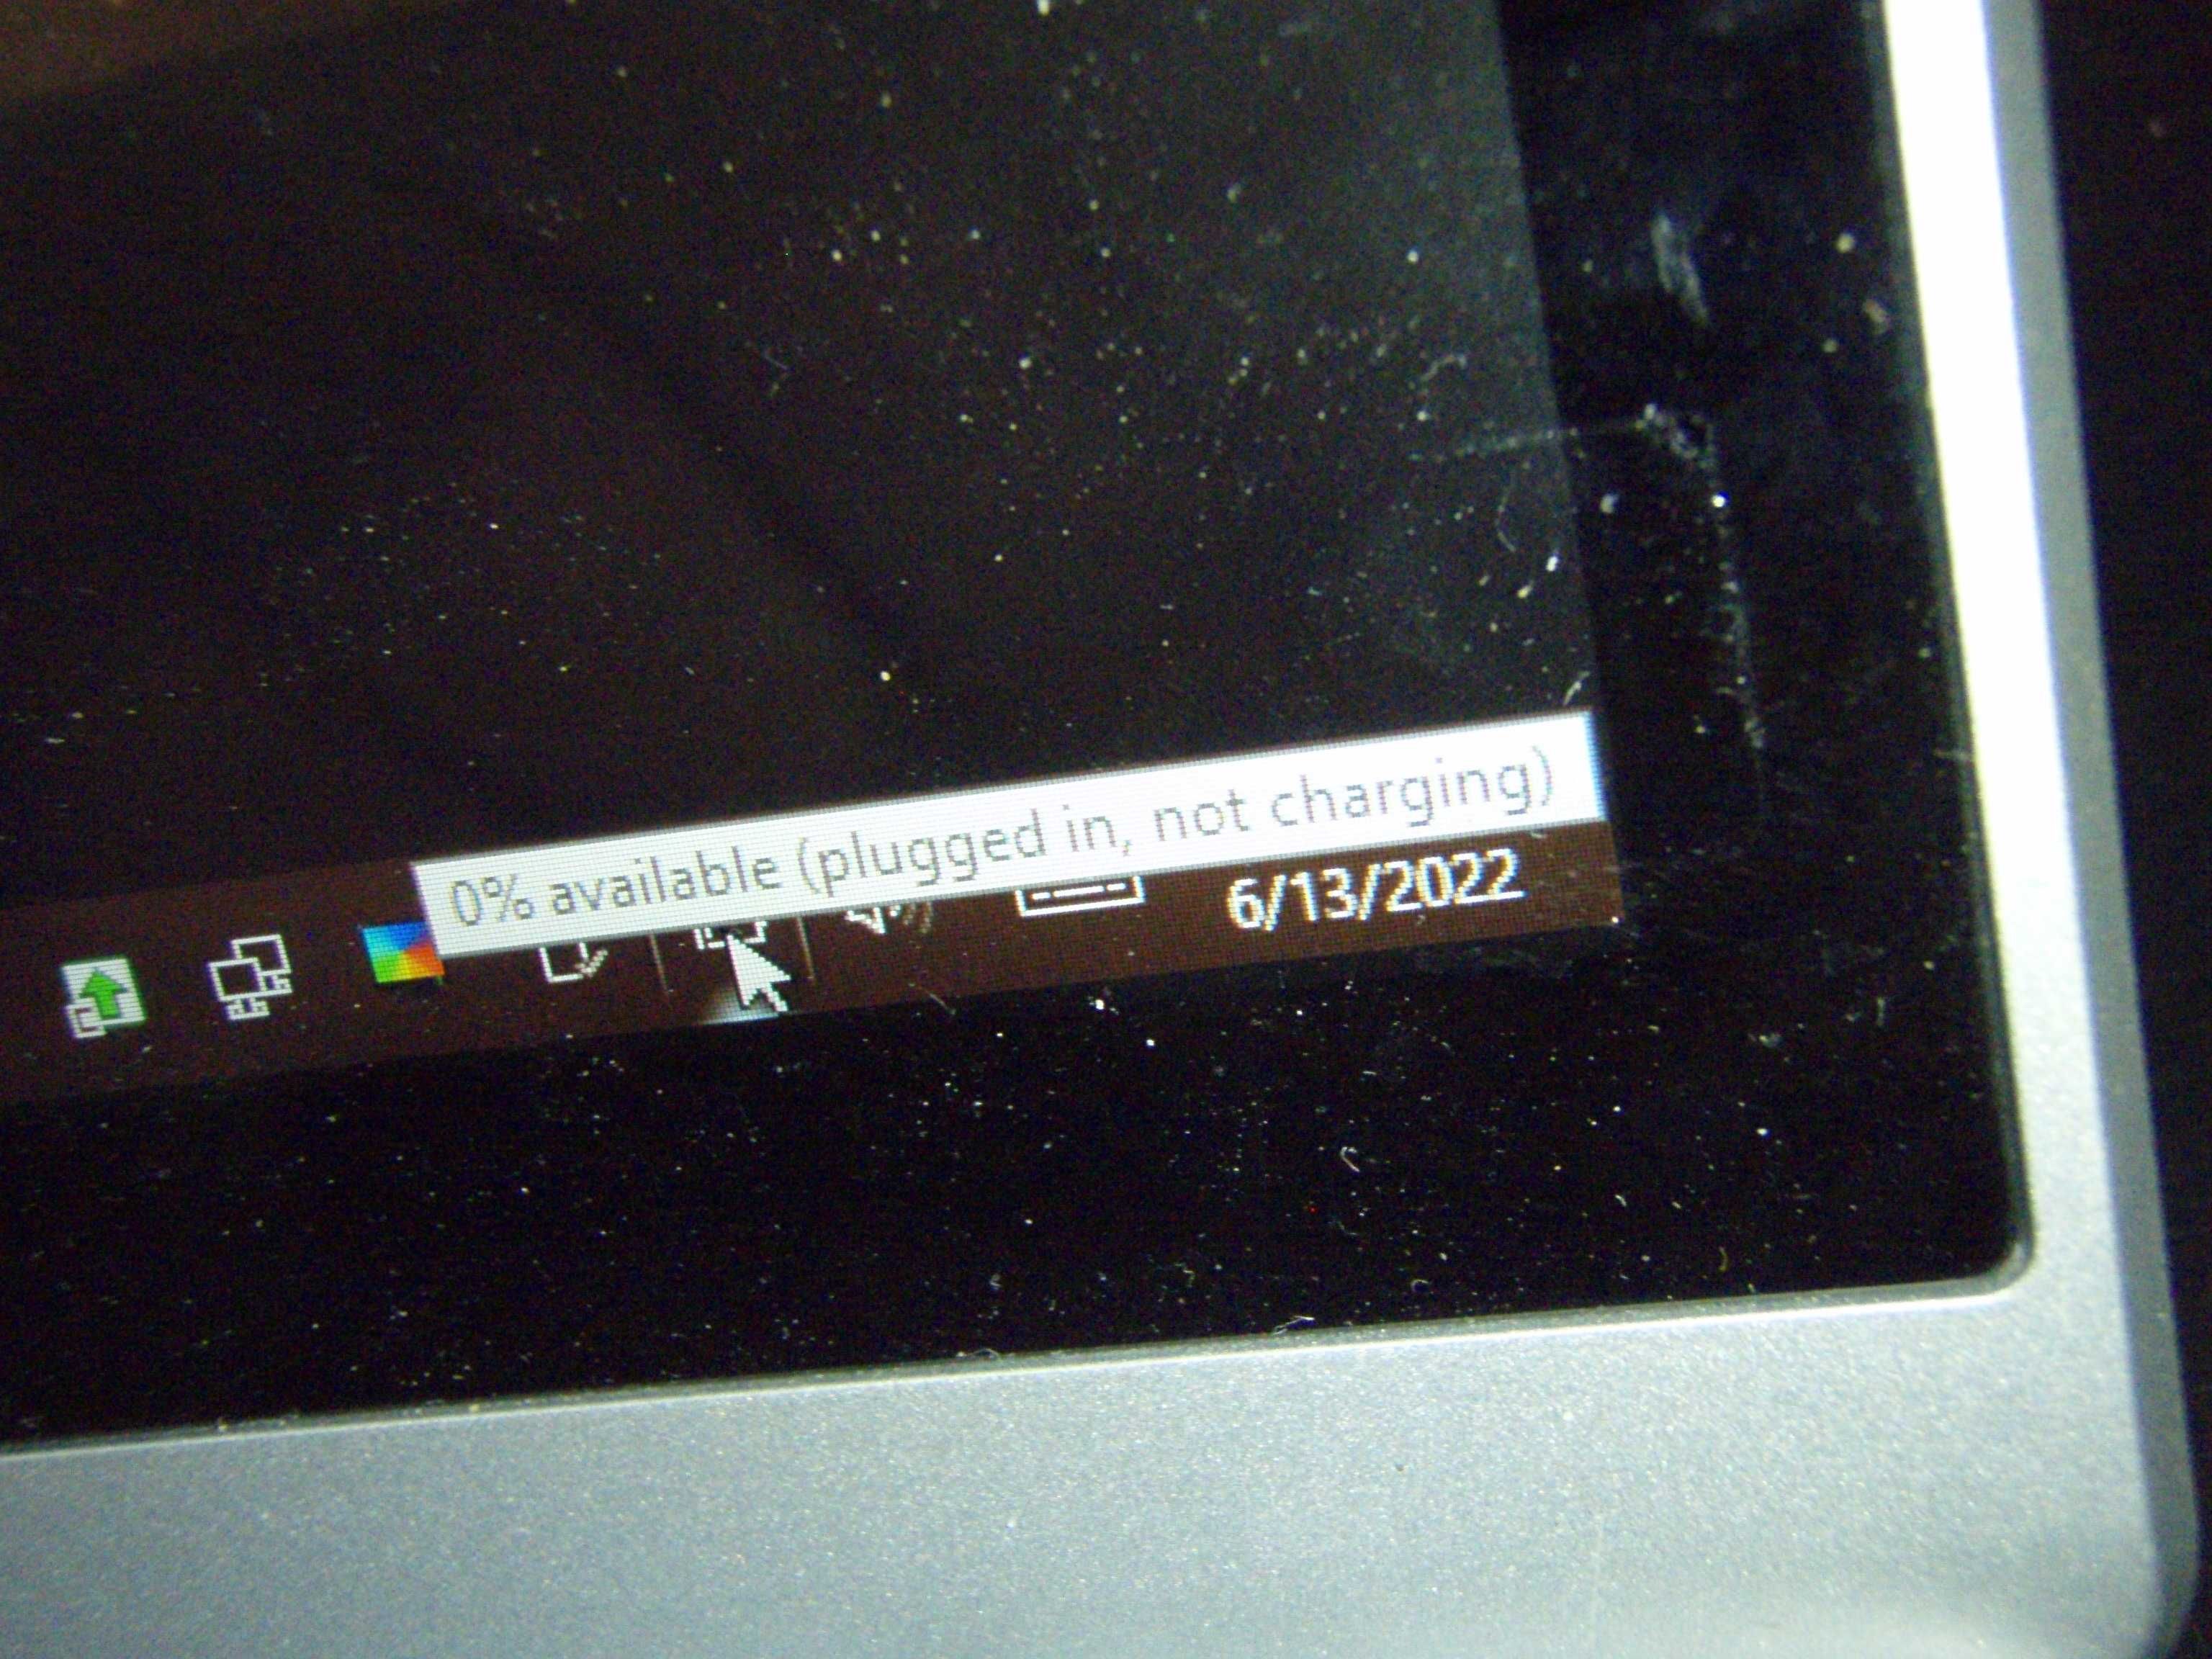 Dezmembrez Acer Aspire V5 122P MS2377 AMD A4-1250 1 Ghz, functional